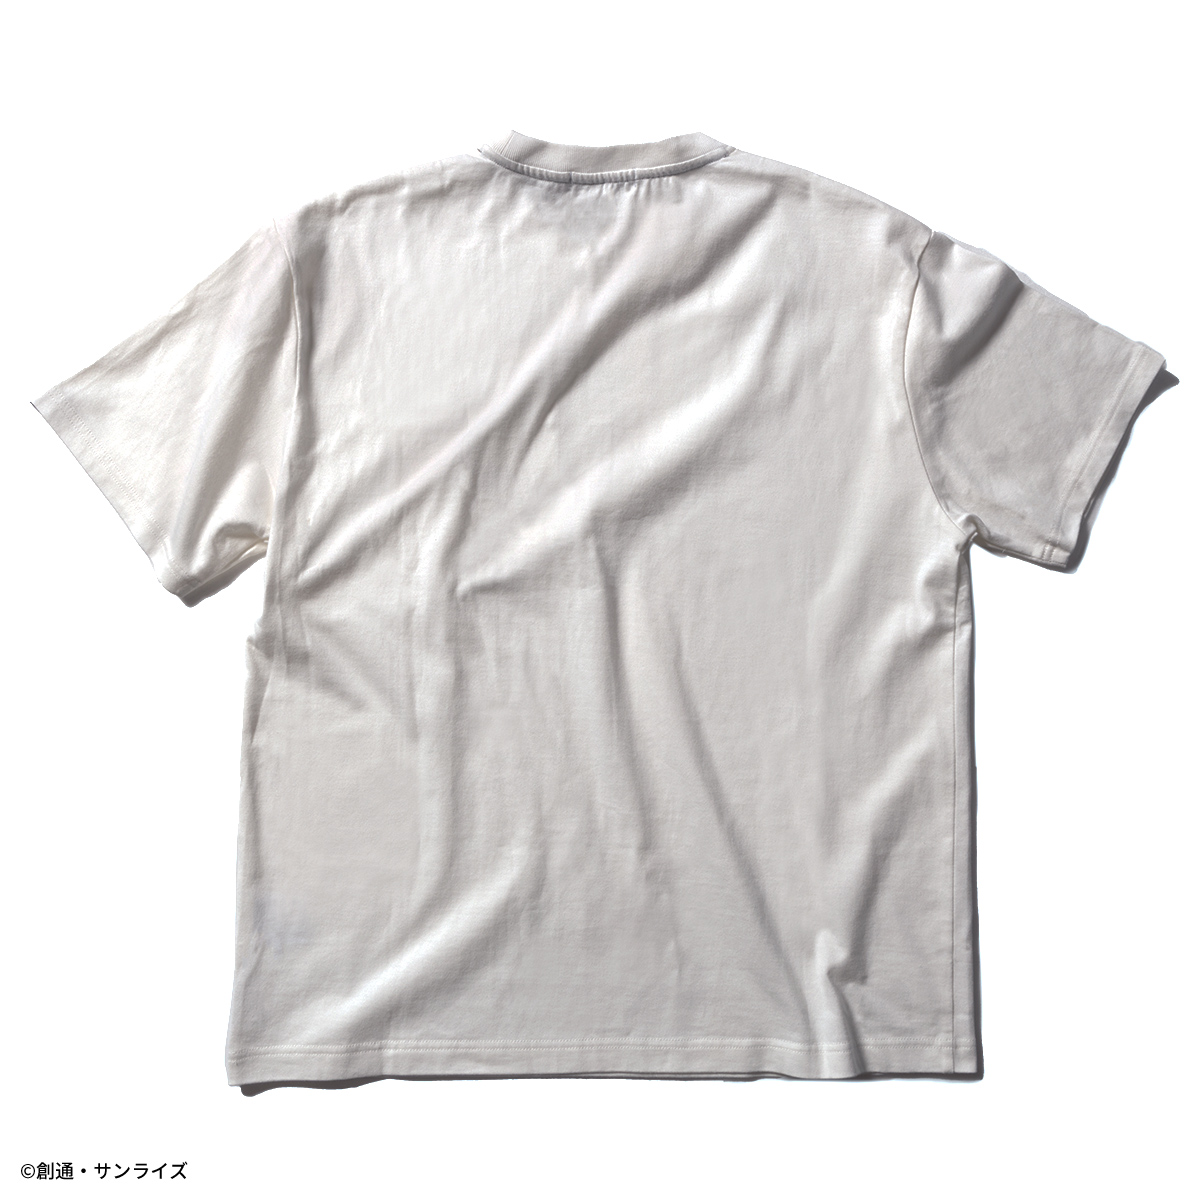 STRICT-G『機動戦士ガンダム』半袖ポケット付きTシャツ ZEON FORCES